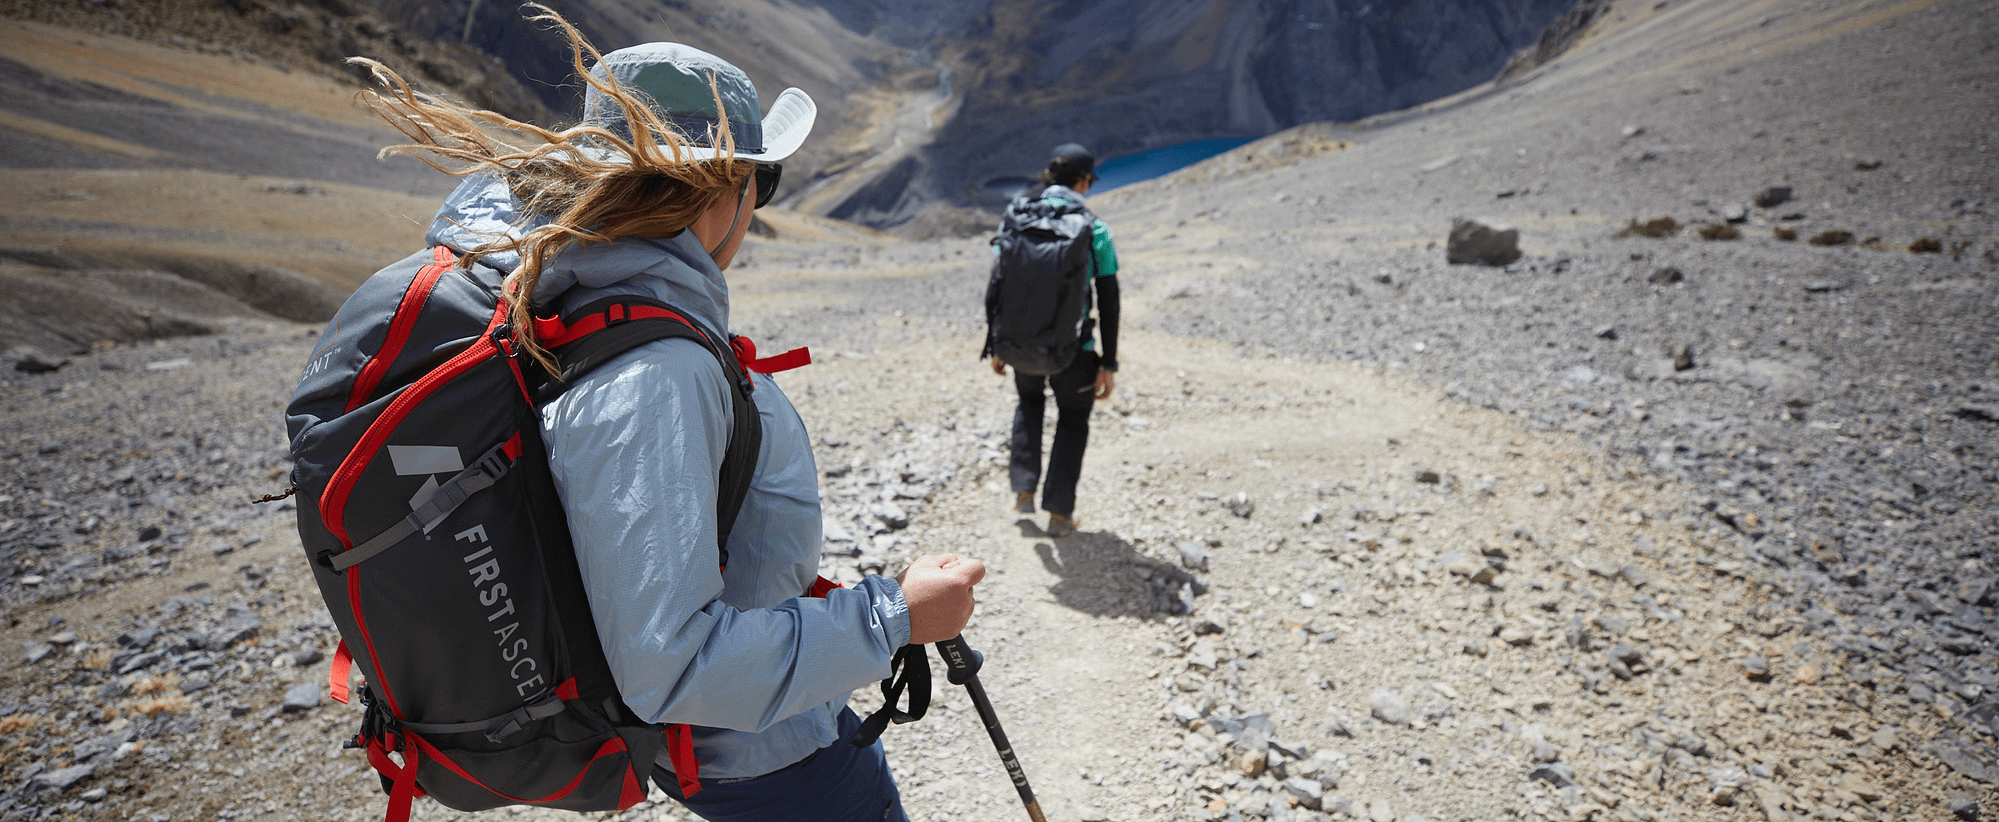 Two hikers in Eddie Bauer gear walk down a rocky mountainside